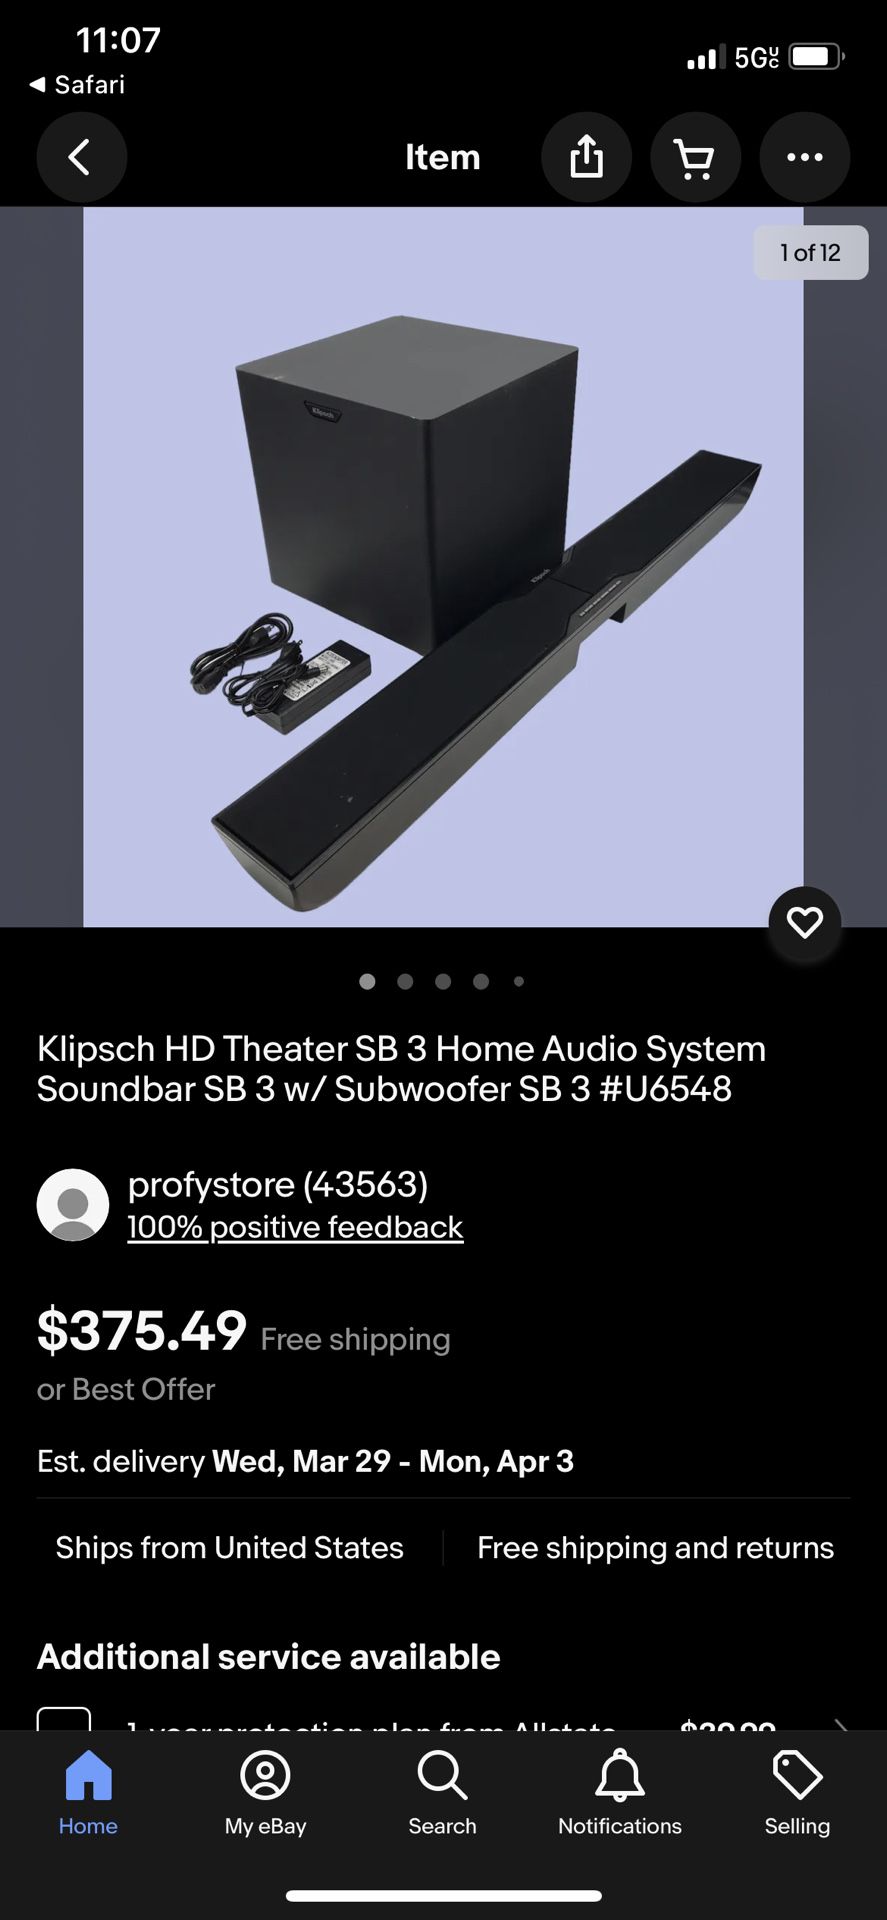 Klipsch HD Theater SB 3 Home Audio System Soundbar SB 3 w/ Subwoofer SB 3 #U6548